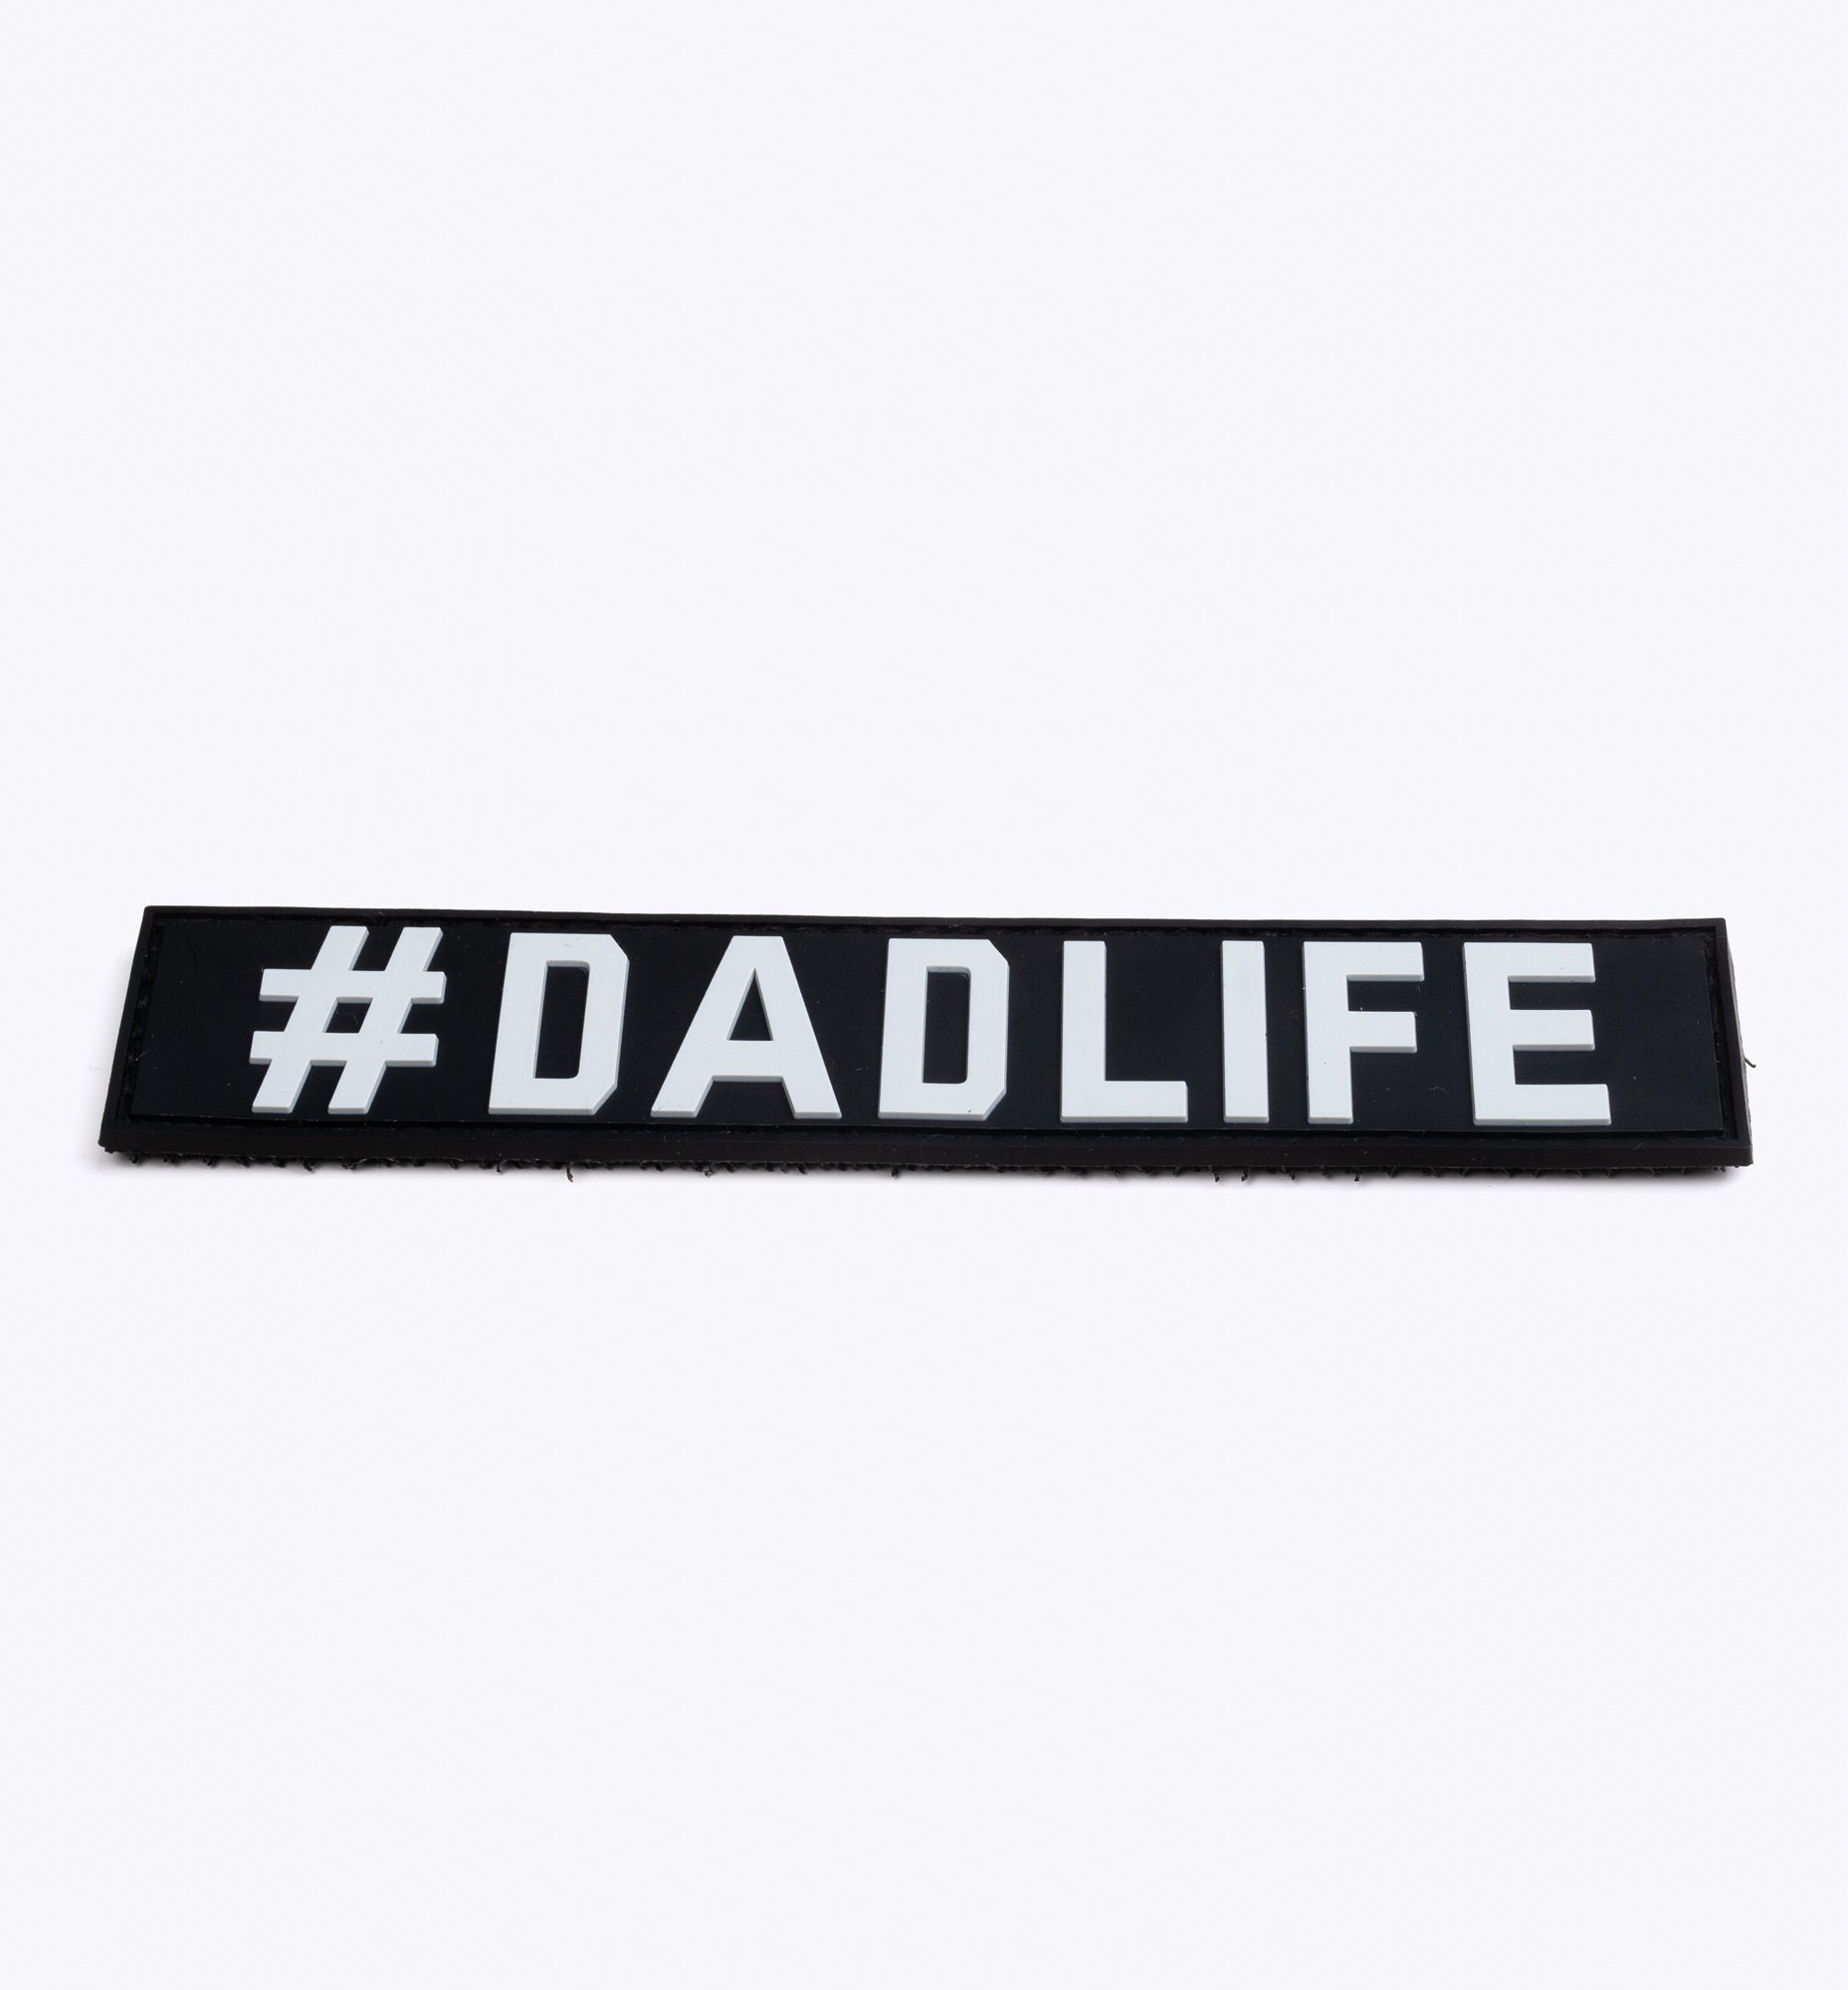 '#DADLIFE' PVC Patch